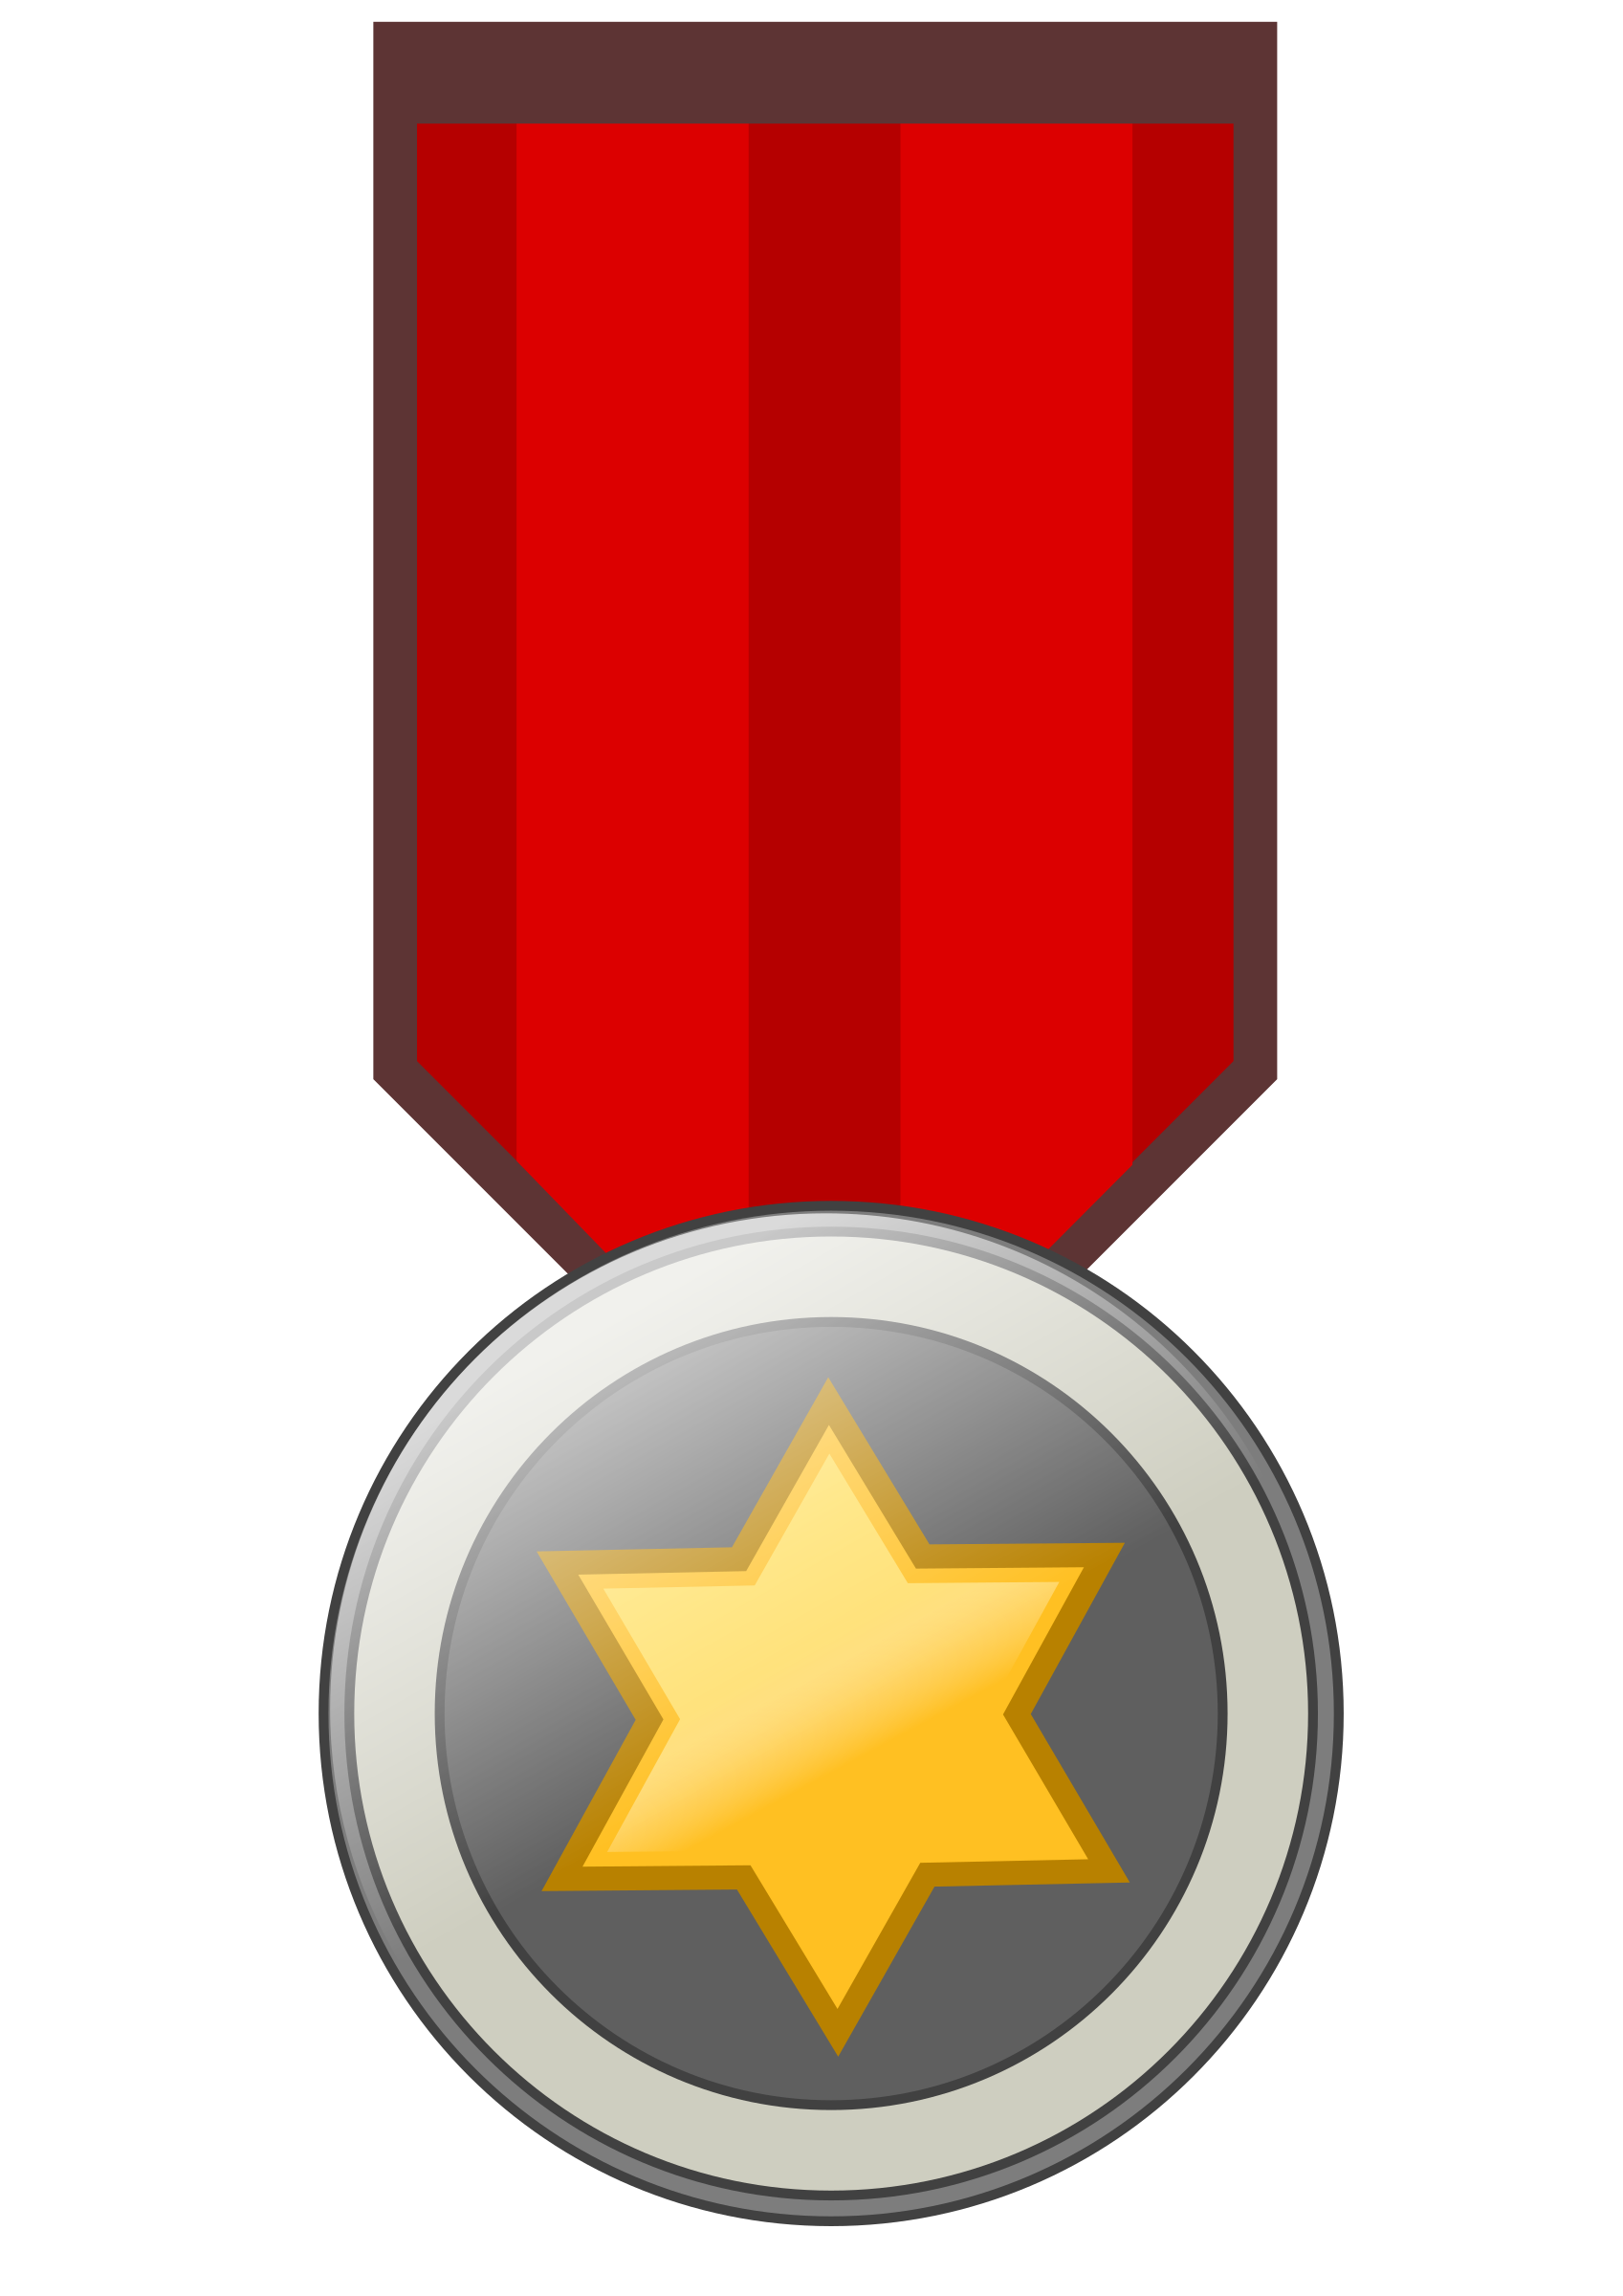 Medal clipart star medal. Award remix badge big